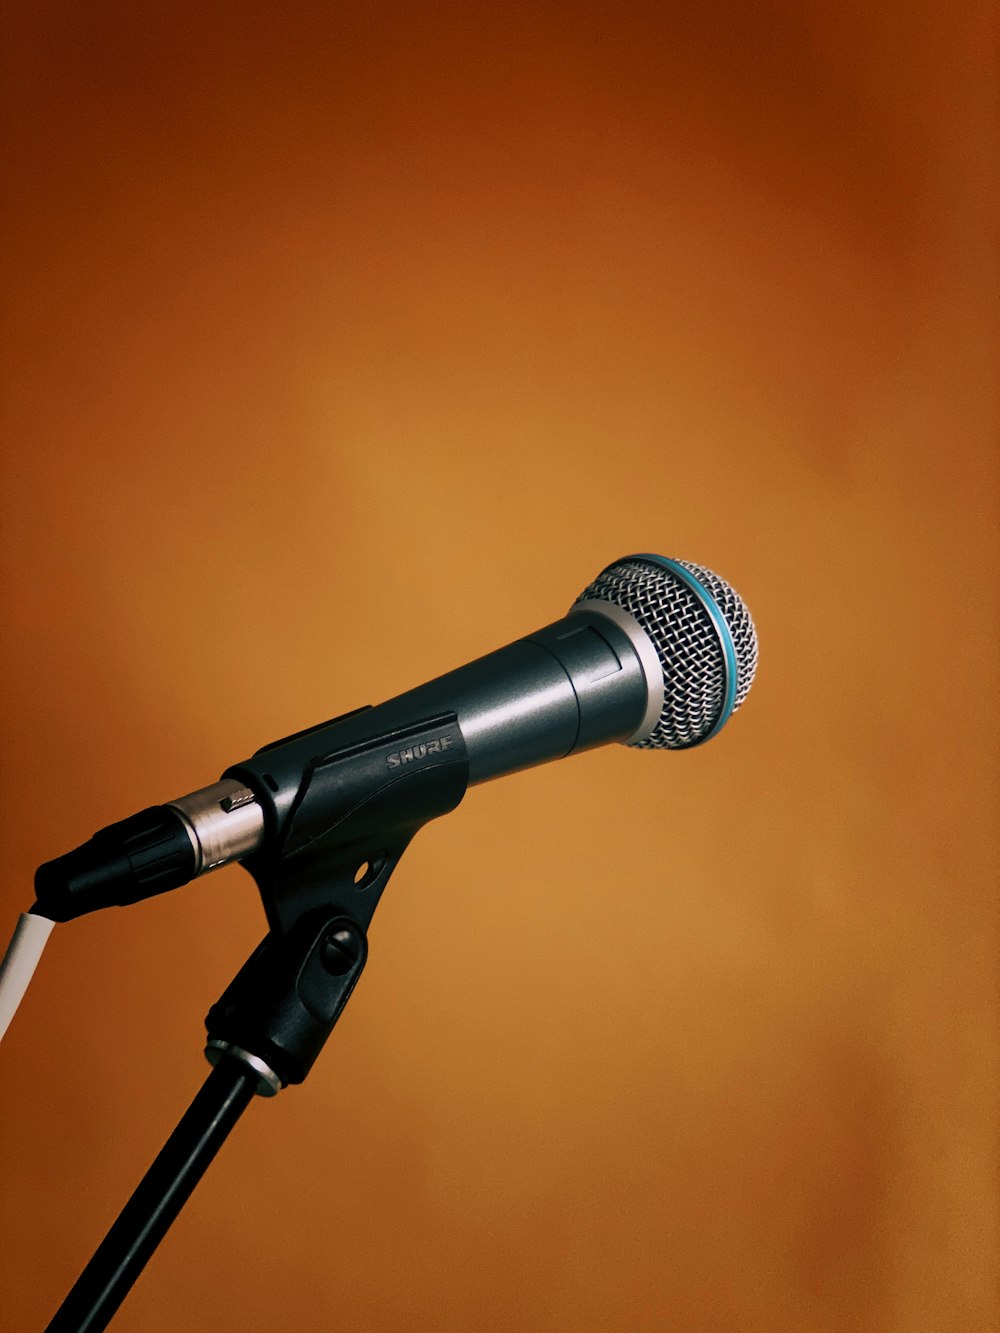 Schwarz-graues Mikrofon auf Mikrofonstativ